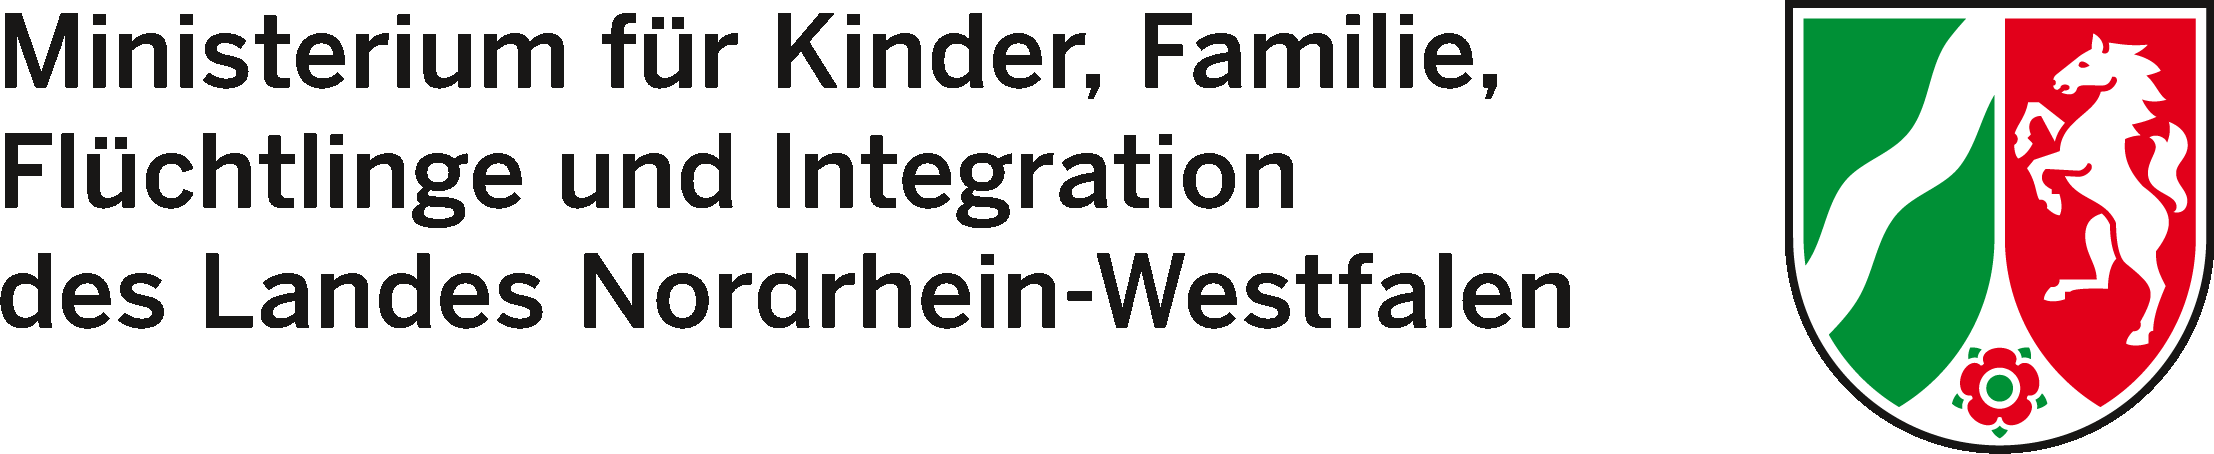 Logo des Ministeriums für Kinder, Familie, Flüchtlinge und Integration des Landes Nordrhein-Westfalen